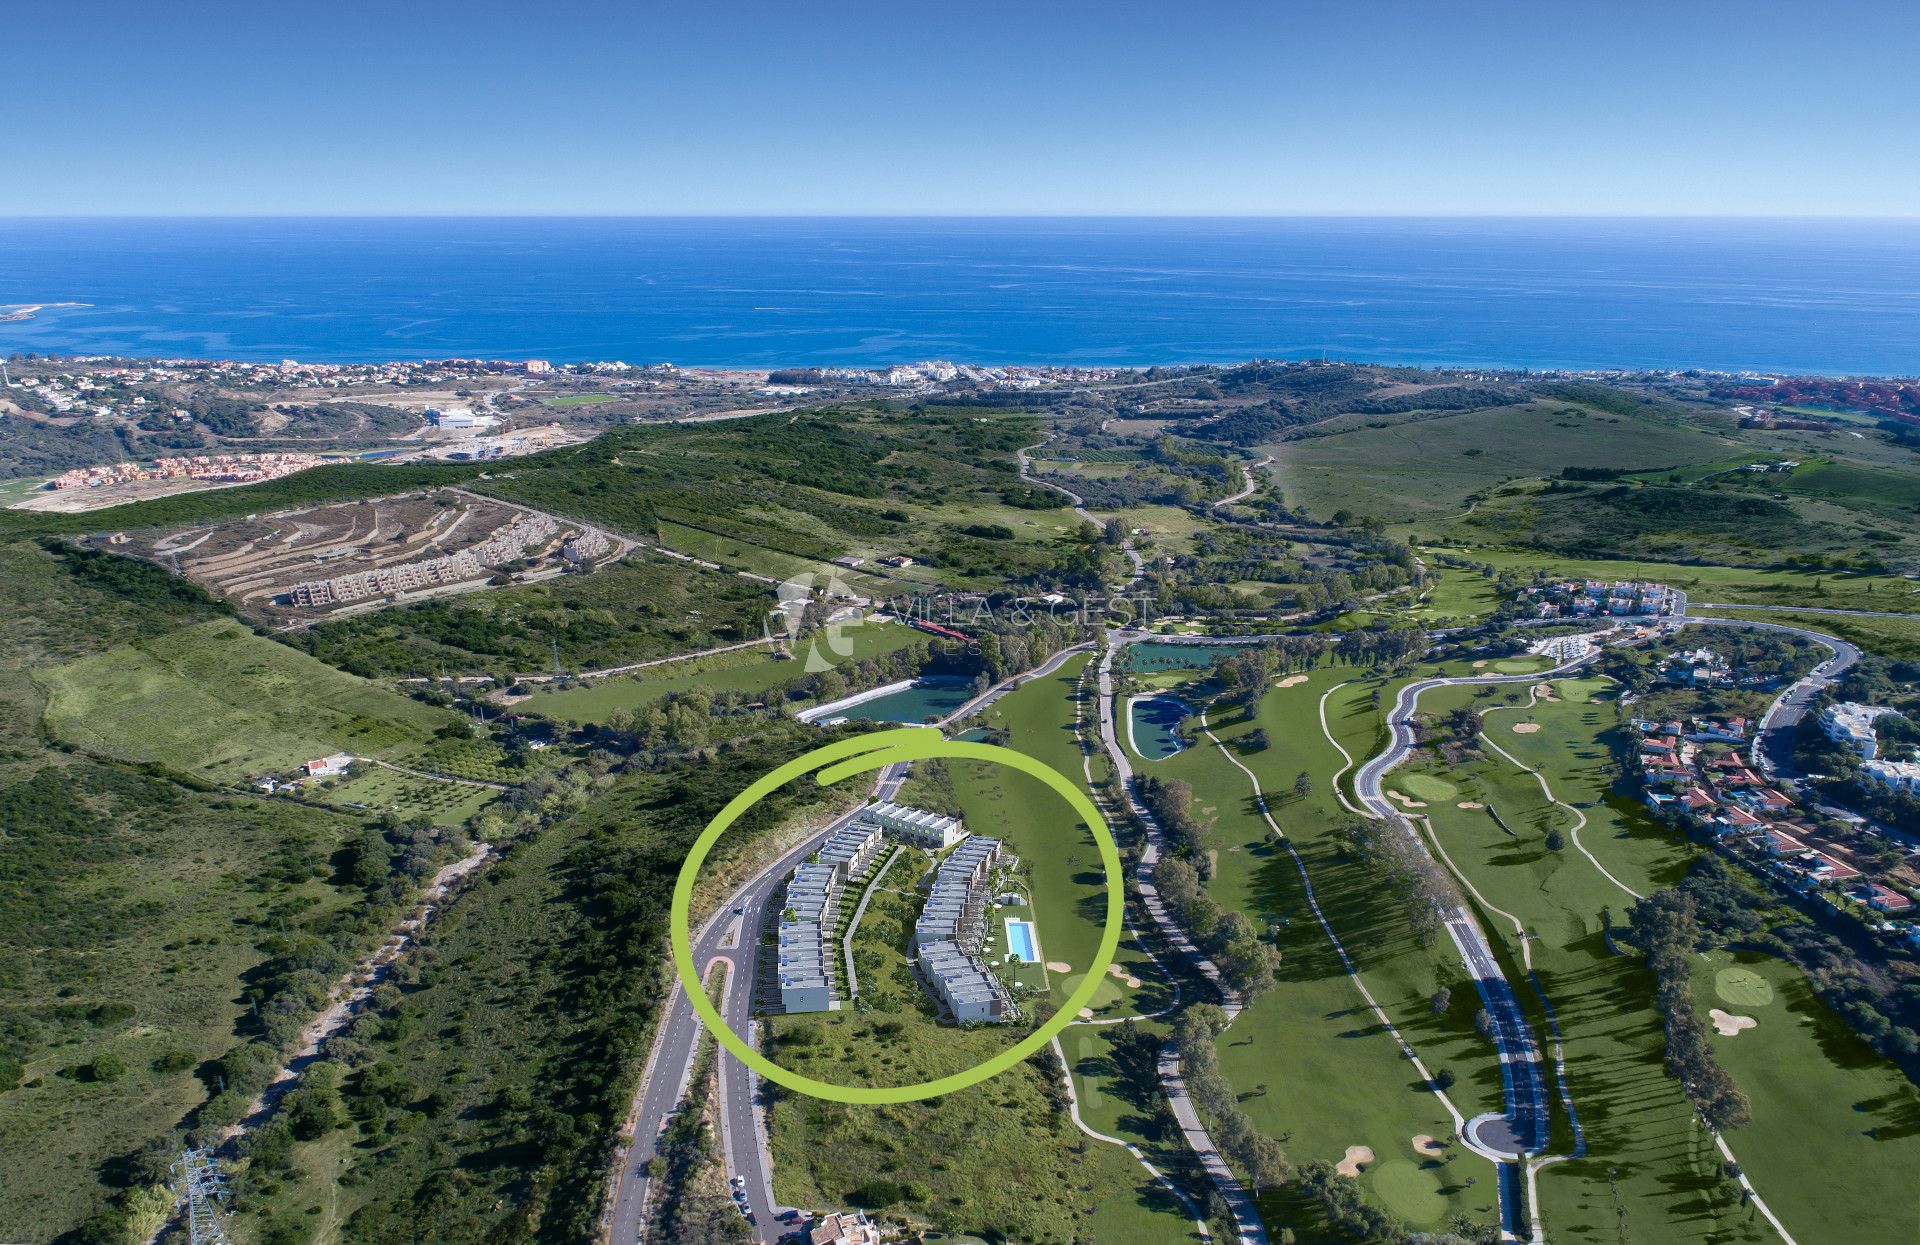 Green Golf, New Development in Estepona